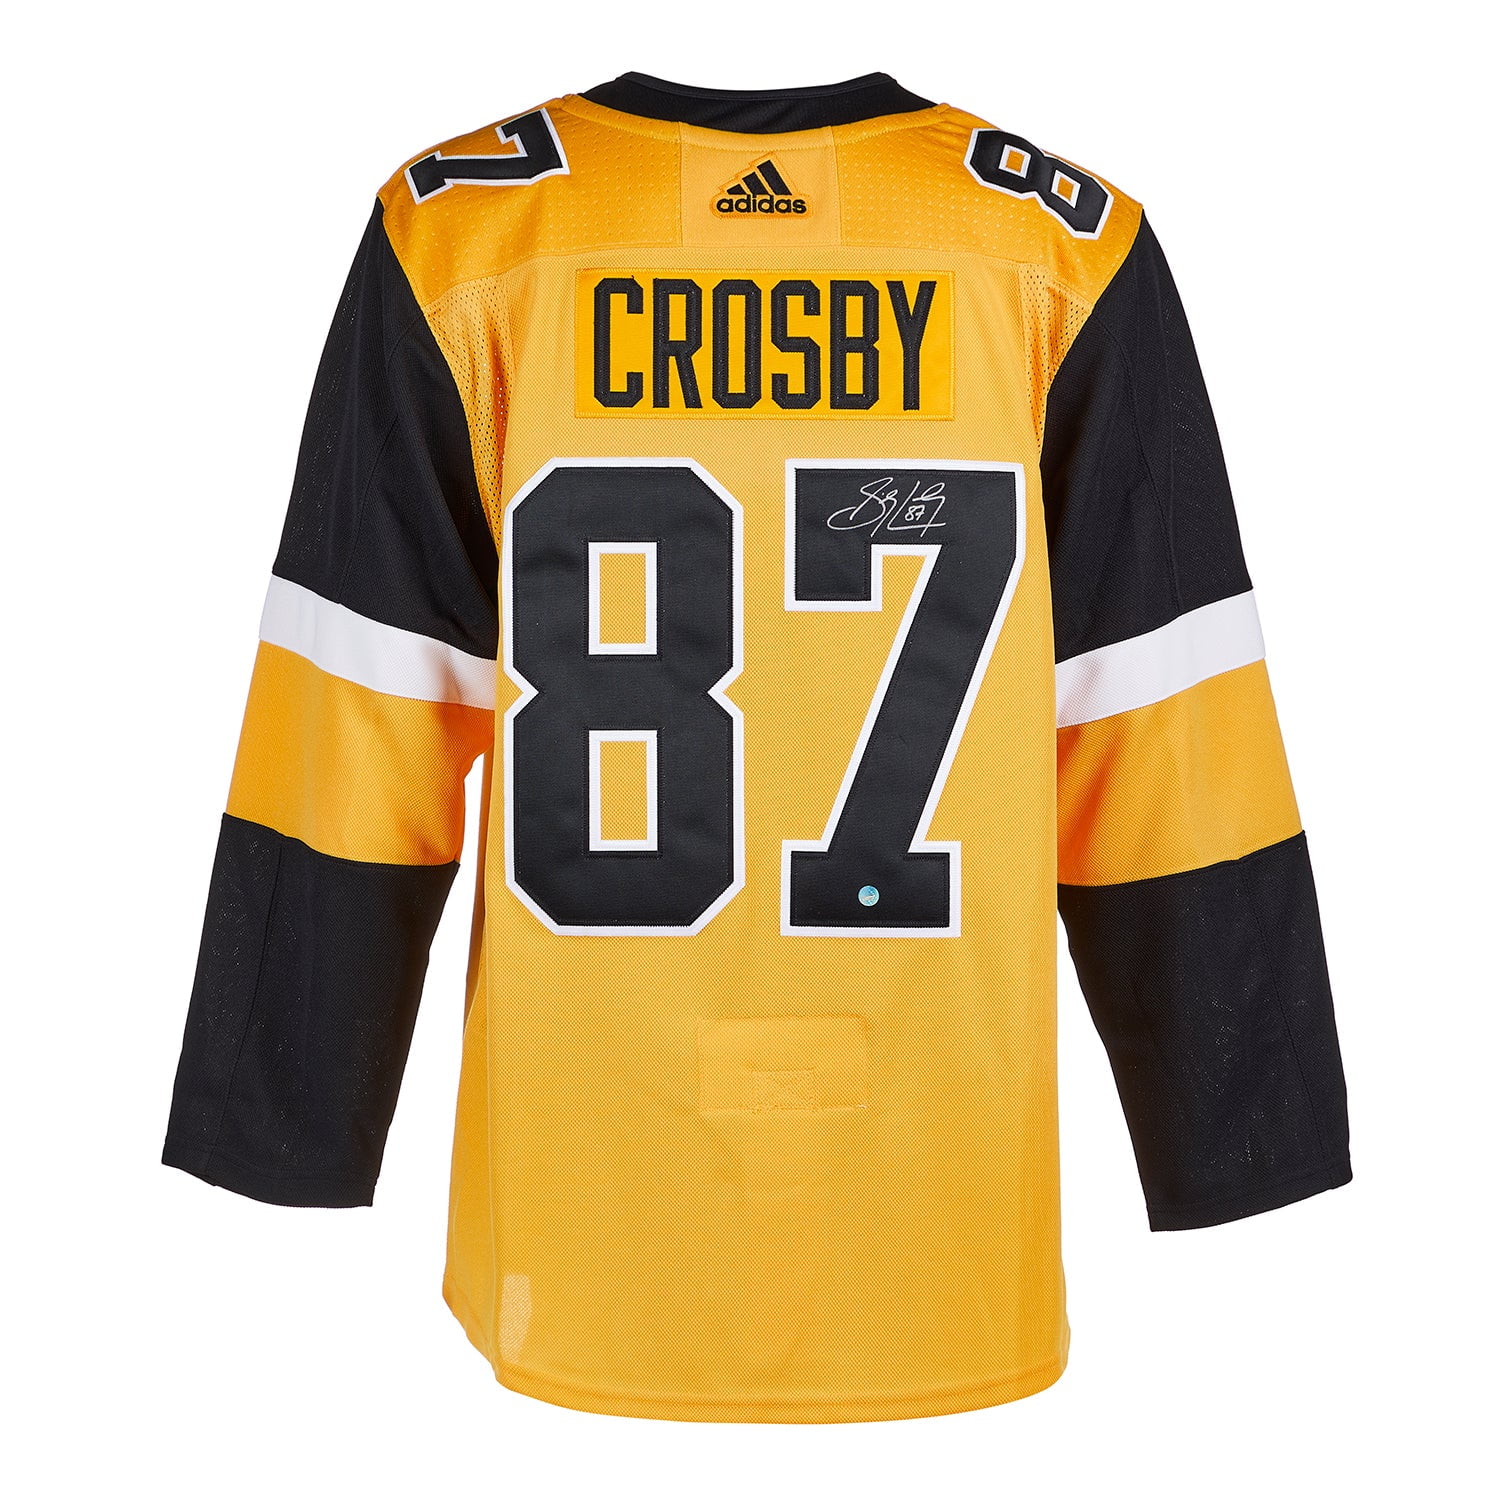 Sidney Crosby Jersey, Adidas Pittsburgh Penguins Sidney Crosby